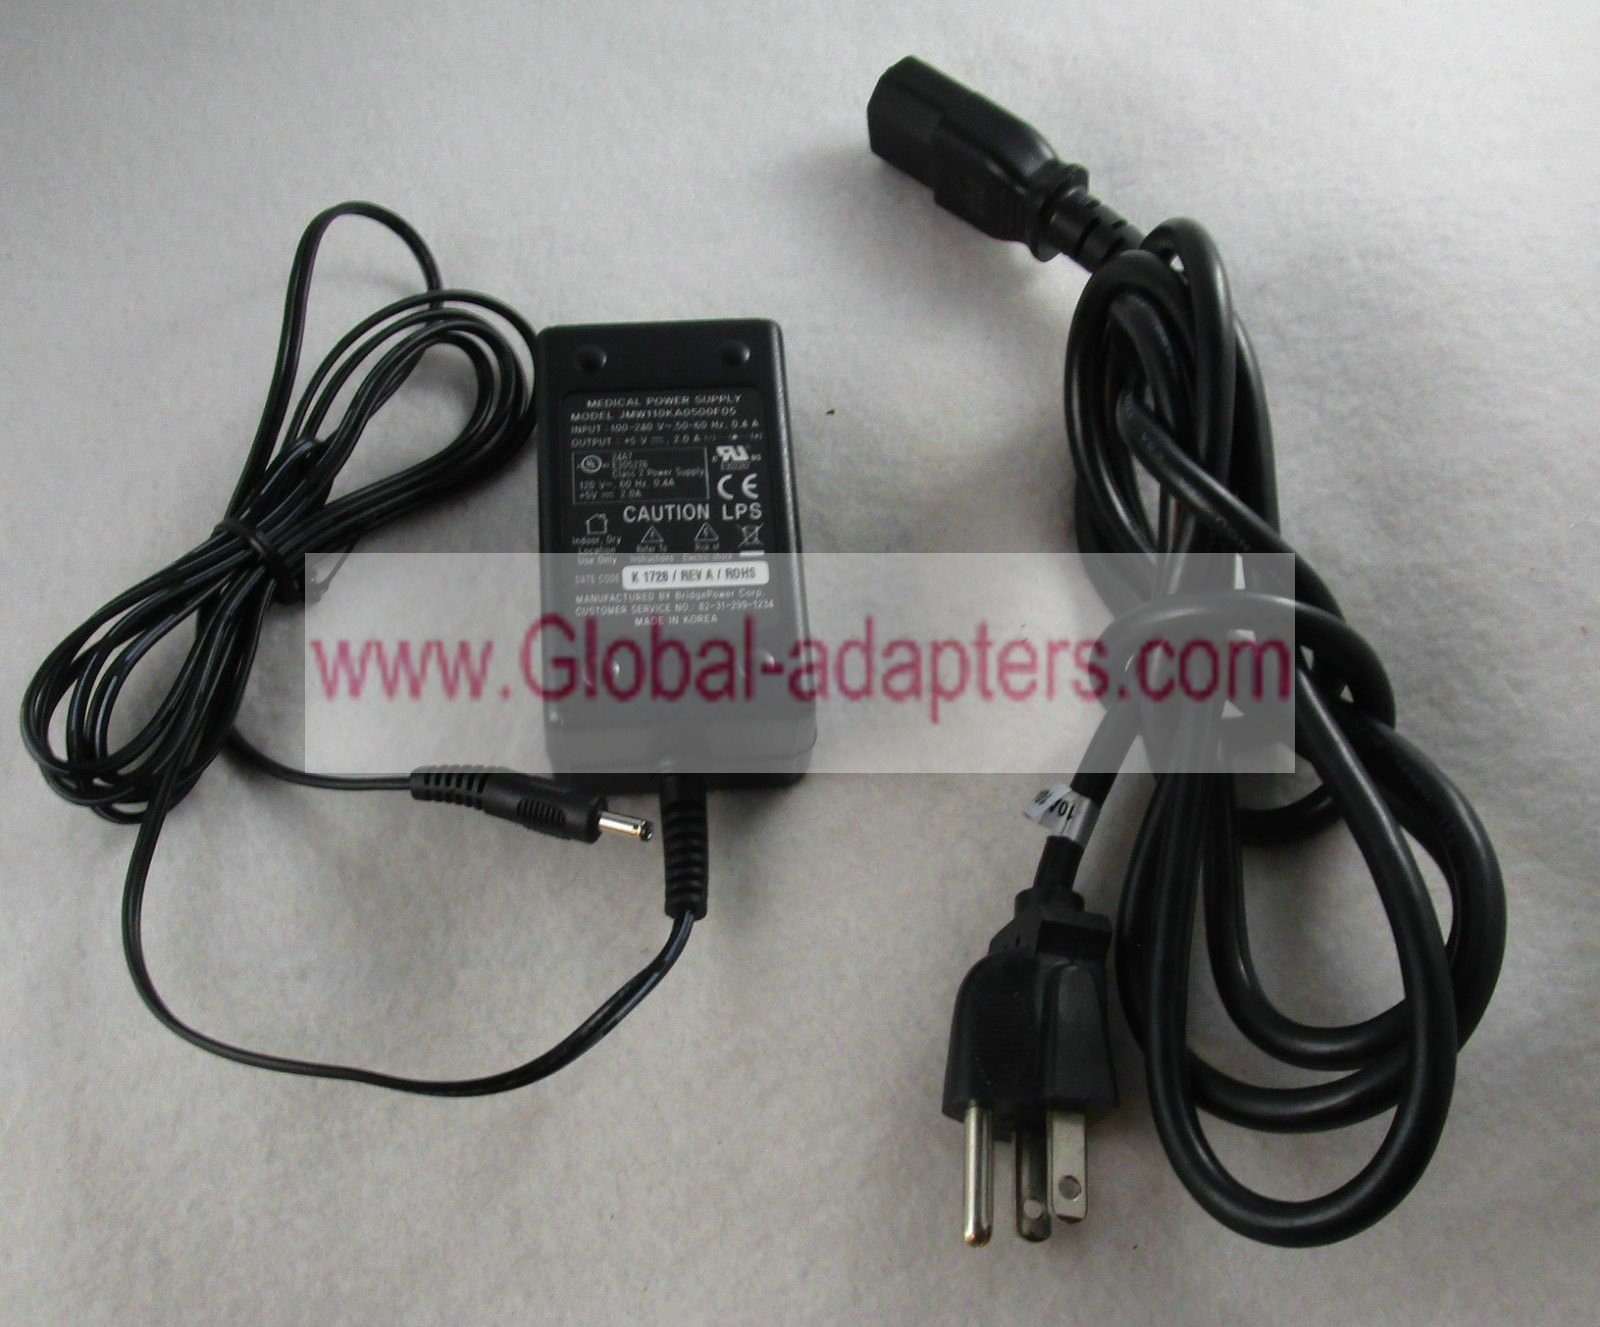 New BridgePower Corp JMW110KA0500F05 Rev A 5V 2.0A Medical Power Supply ac adapter Specification: